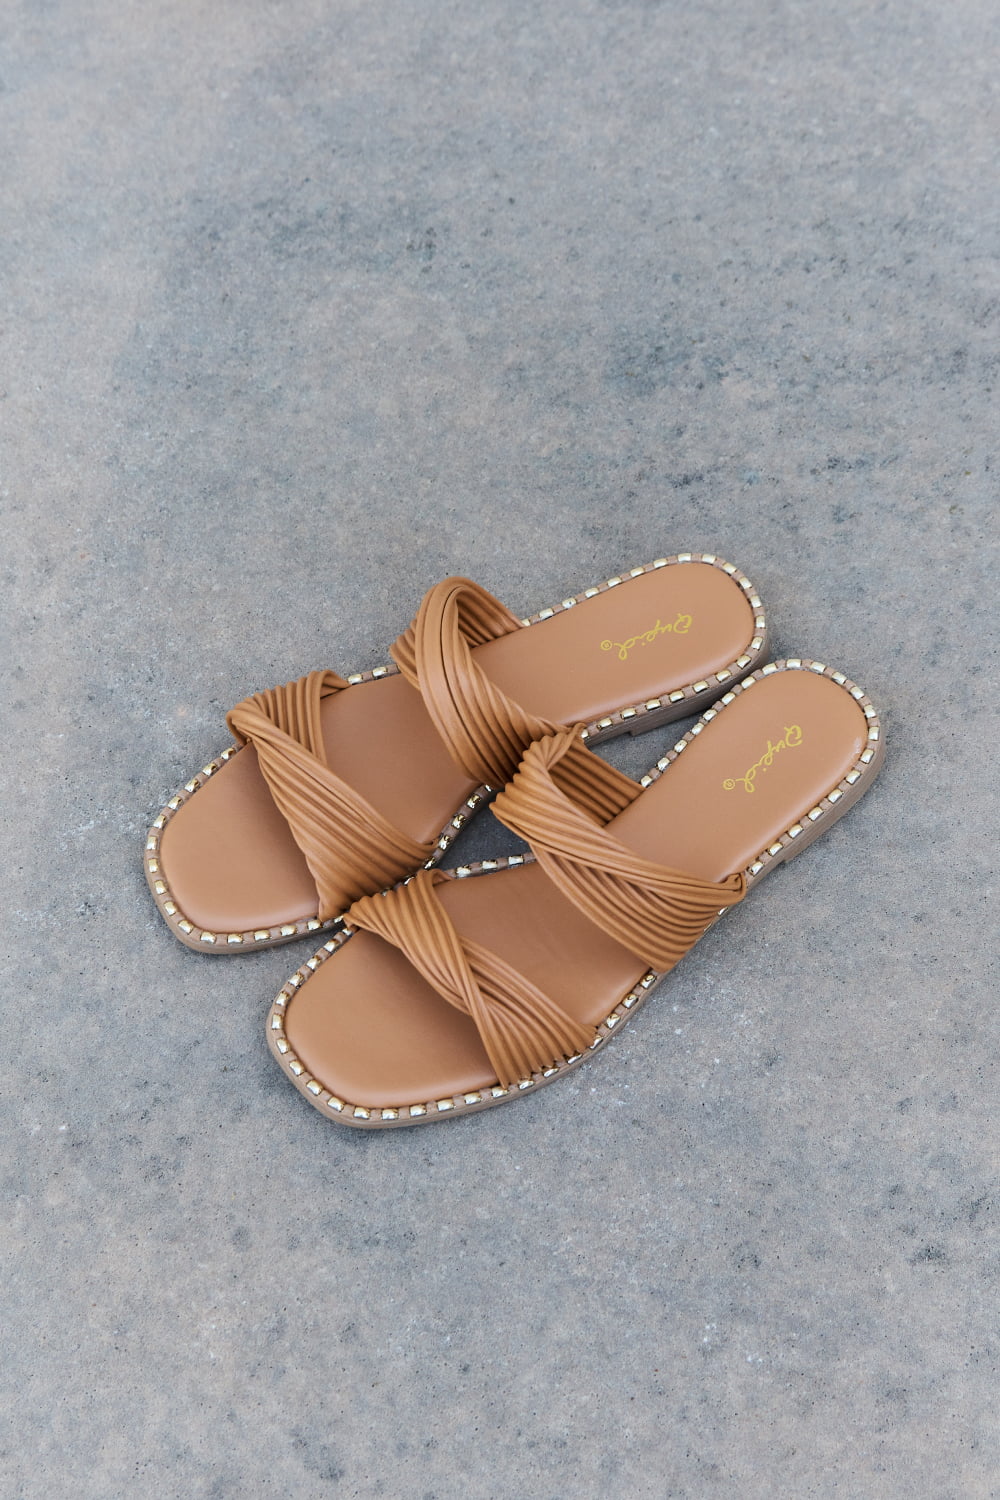 Qupid Summertime Fine Double Strap Twist Sandals - Fashion Girl Online Store